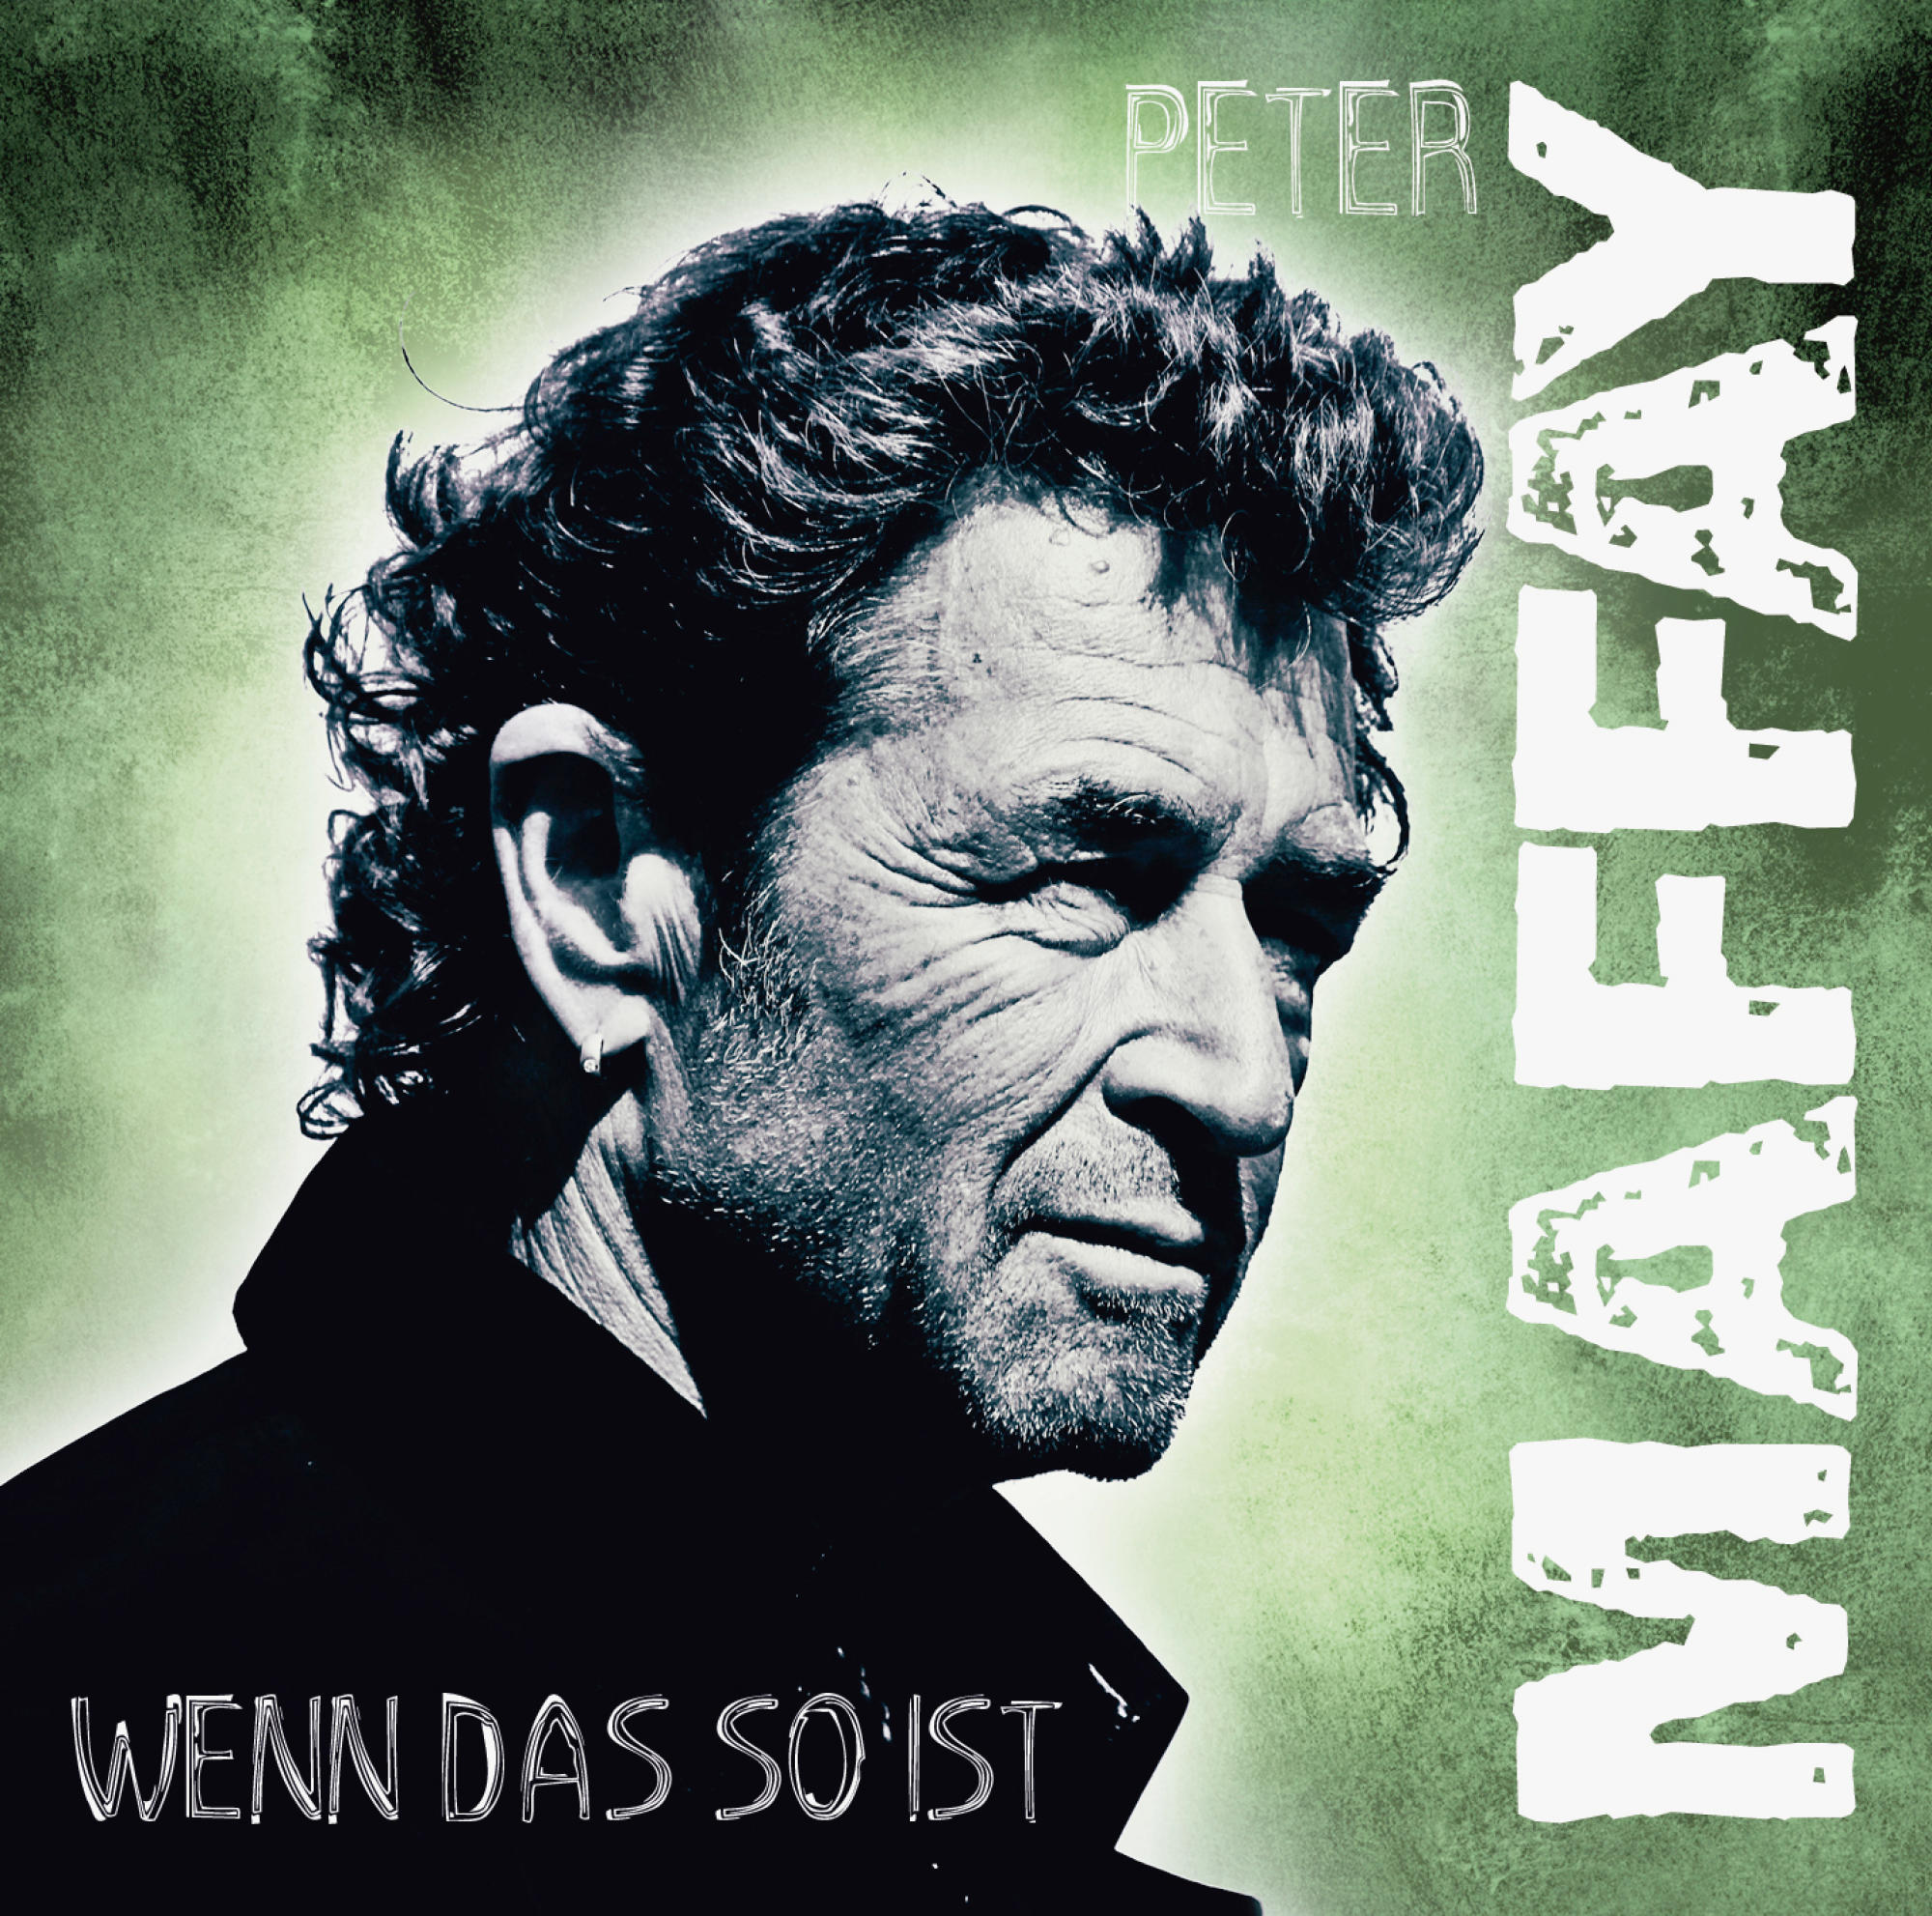 Peter Maffay das - (CD) Wenn ist - so